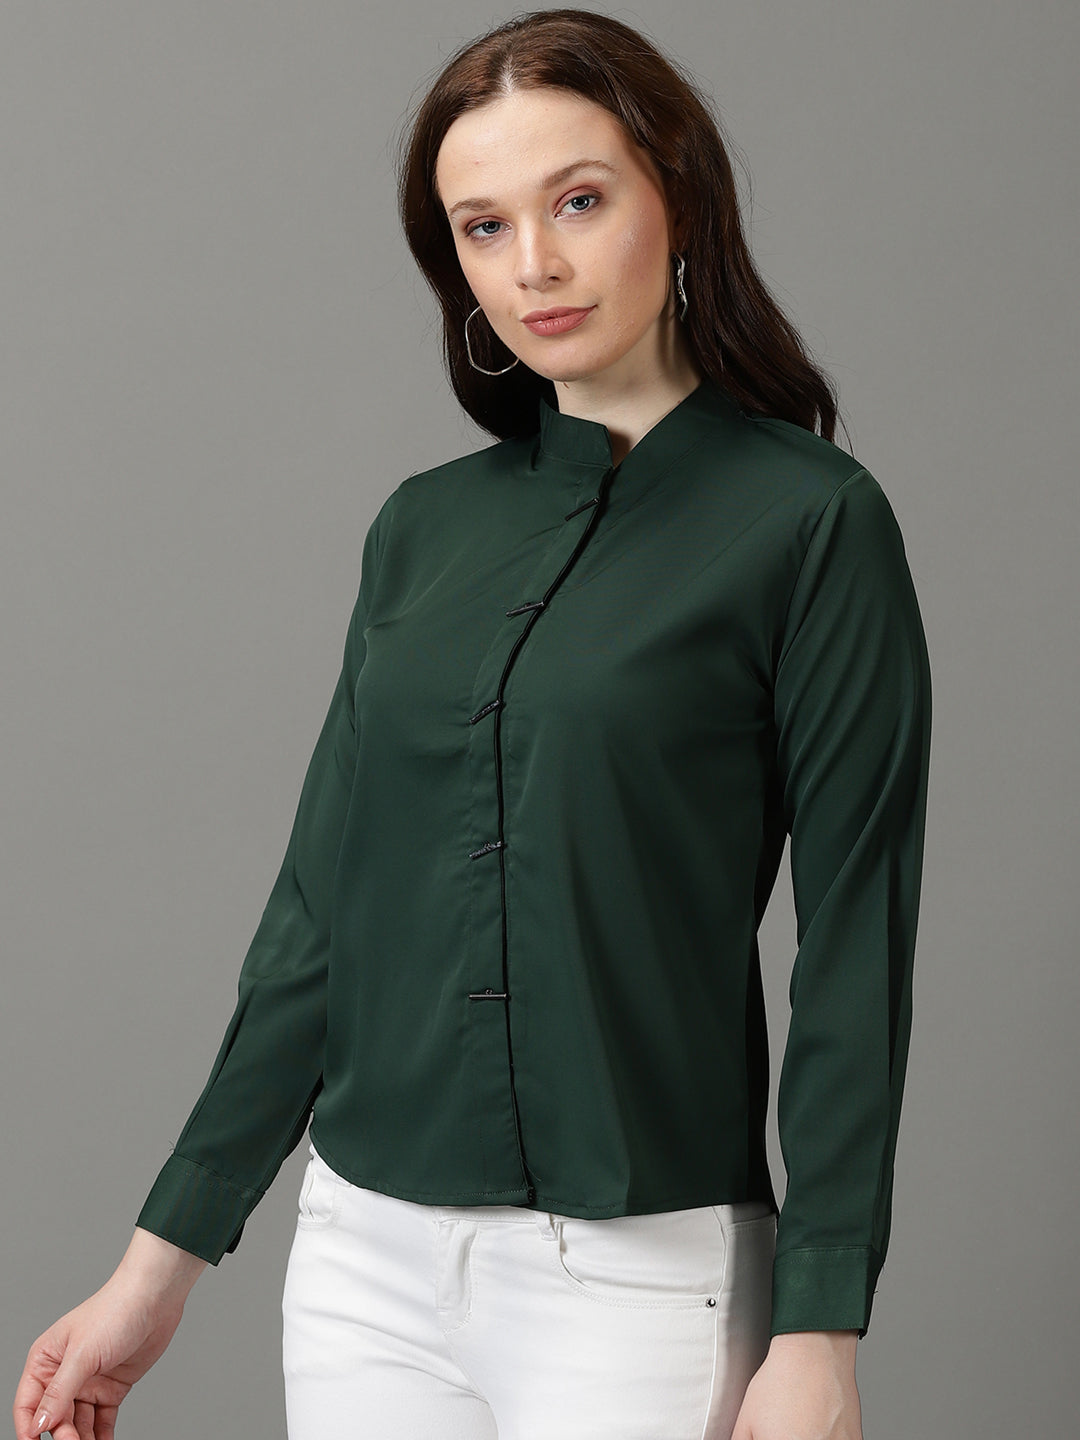 Women Mandarin Collar Solid Green Shirt Style Top